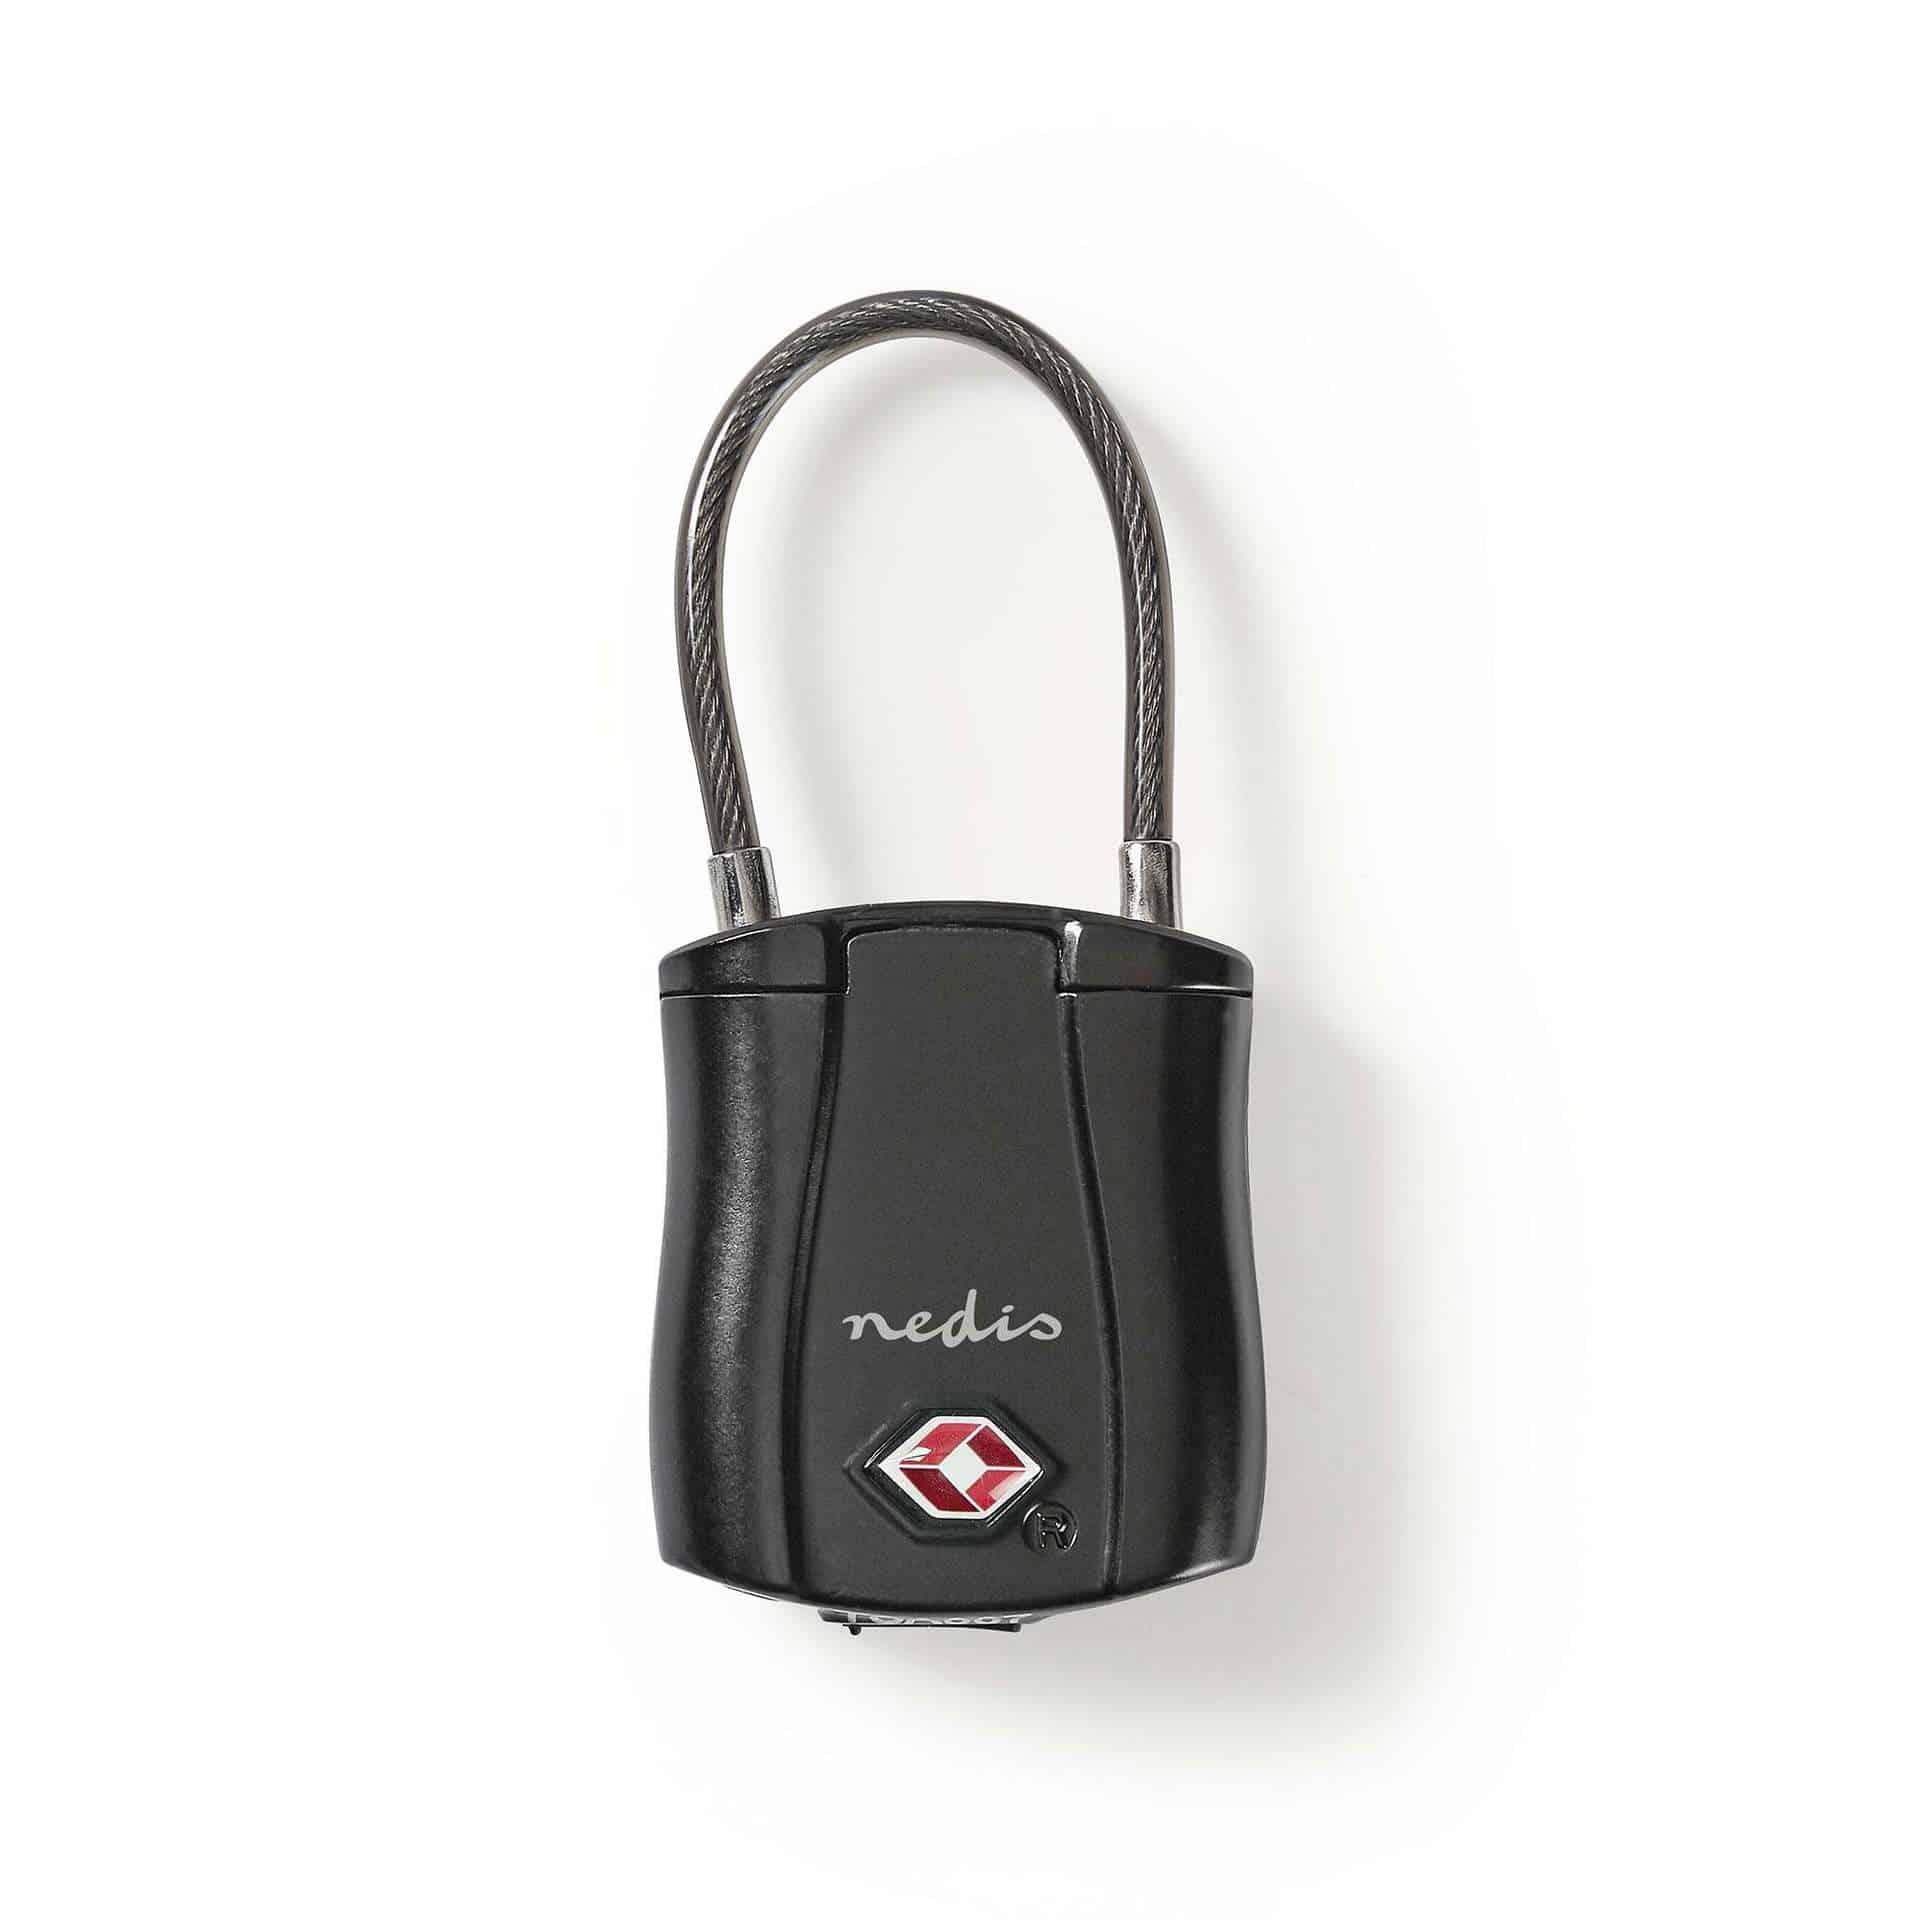 Lock Security Travel Bluetooth Nedis